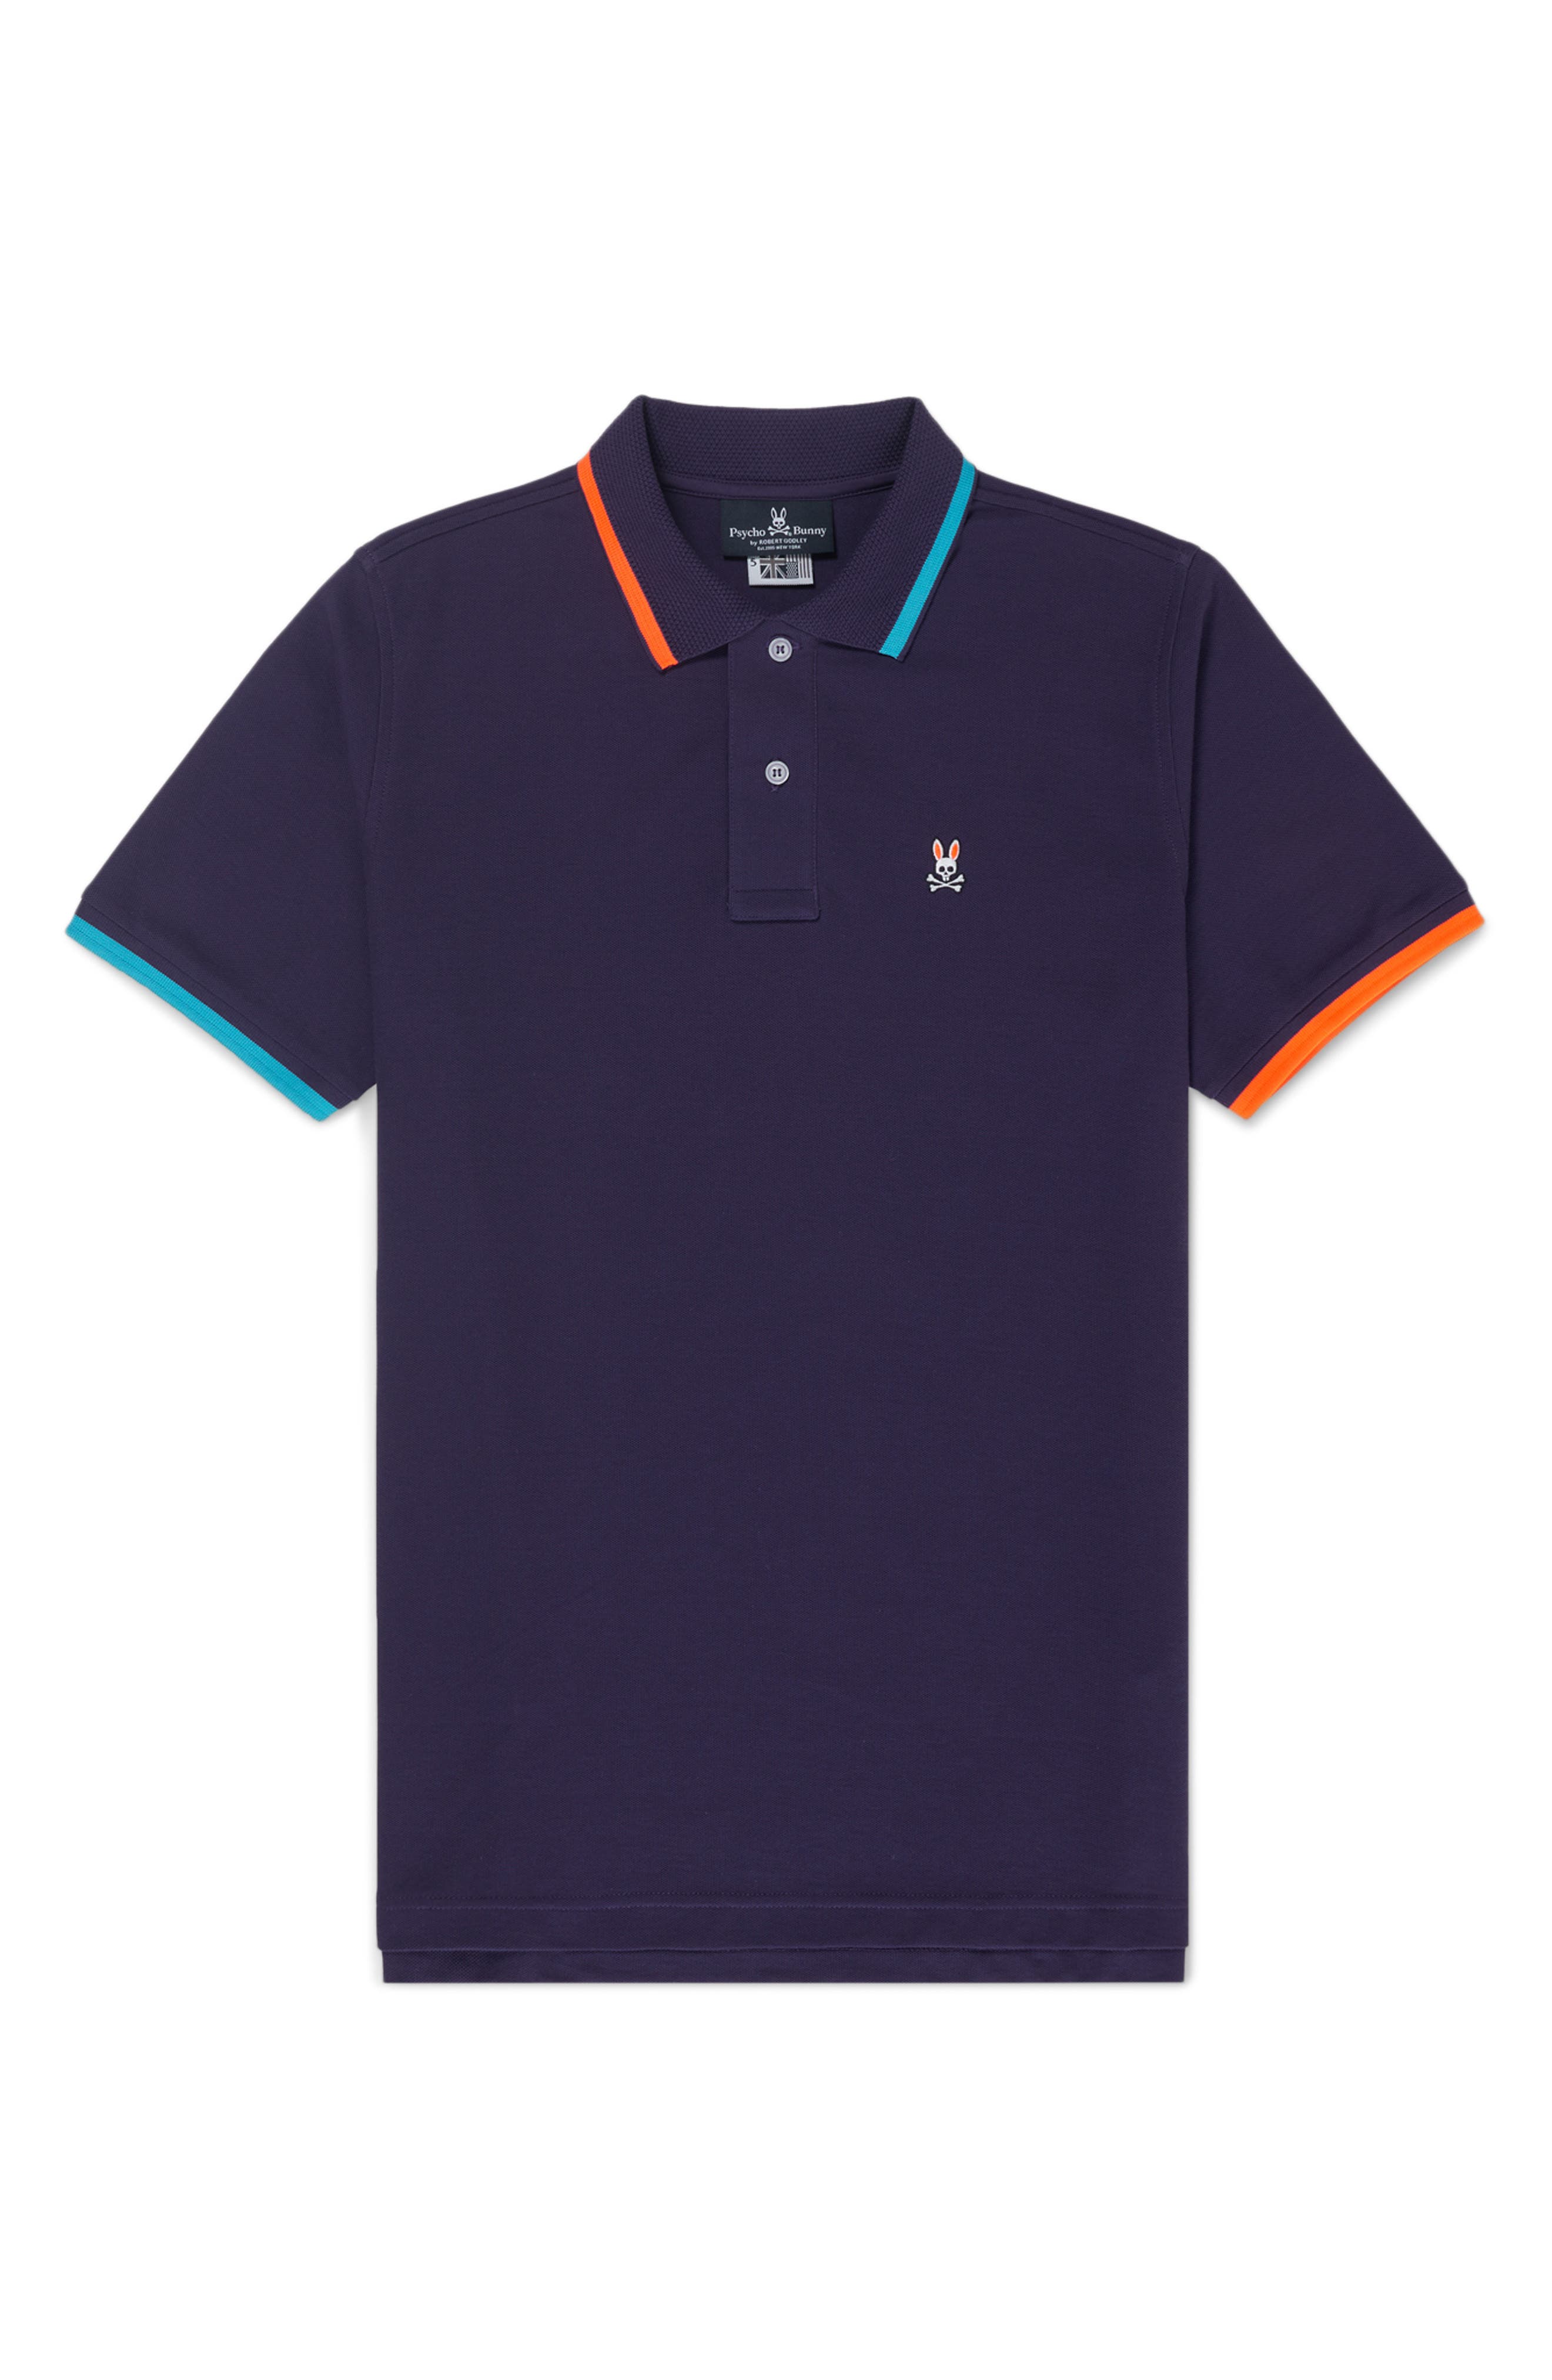 C-JOY M-Logo Mens Modern Fit Short Sleeve Polo Shirt Tee